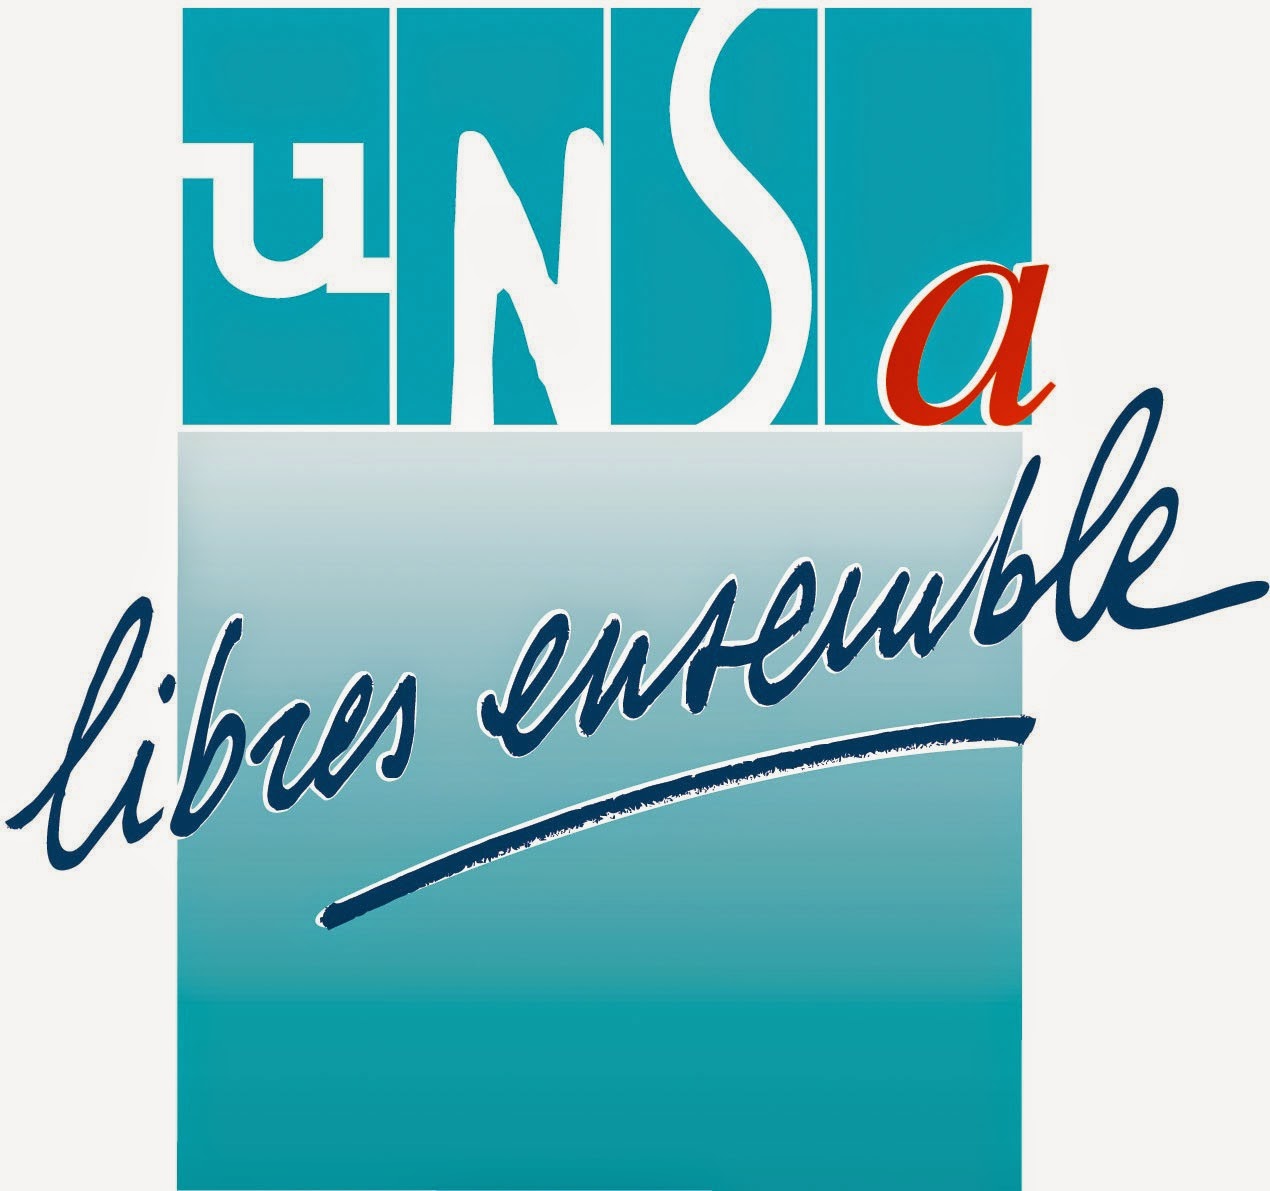 Adhérez à l'UNSa !